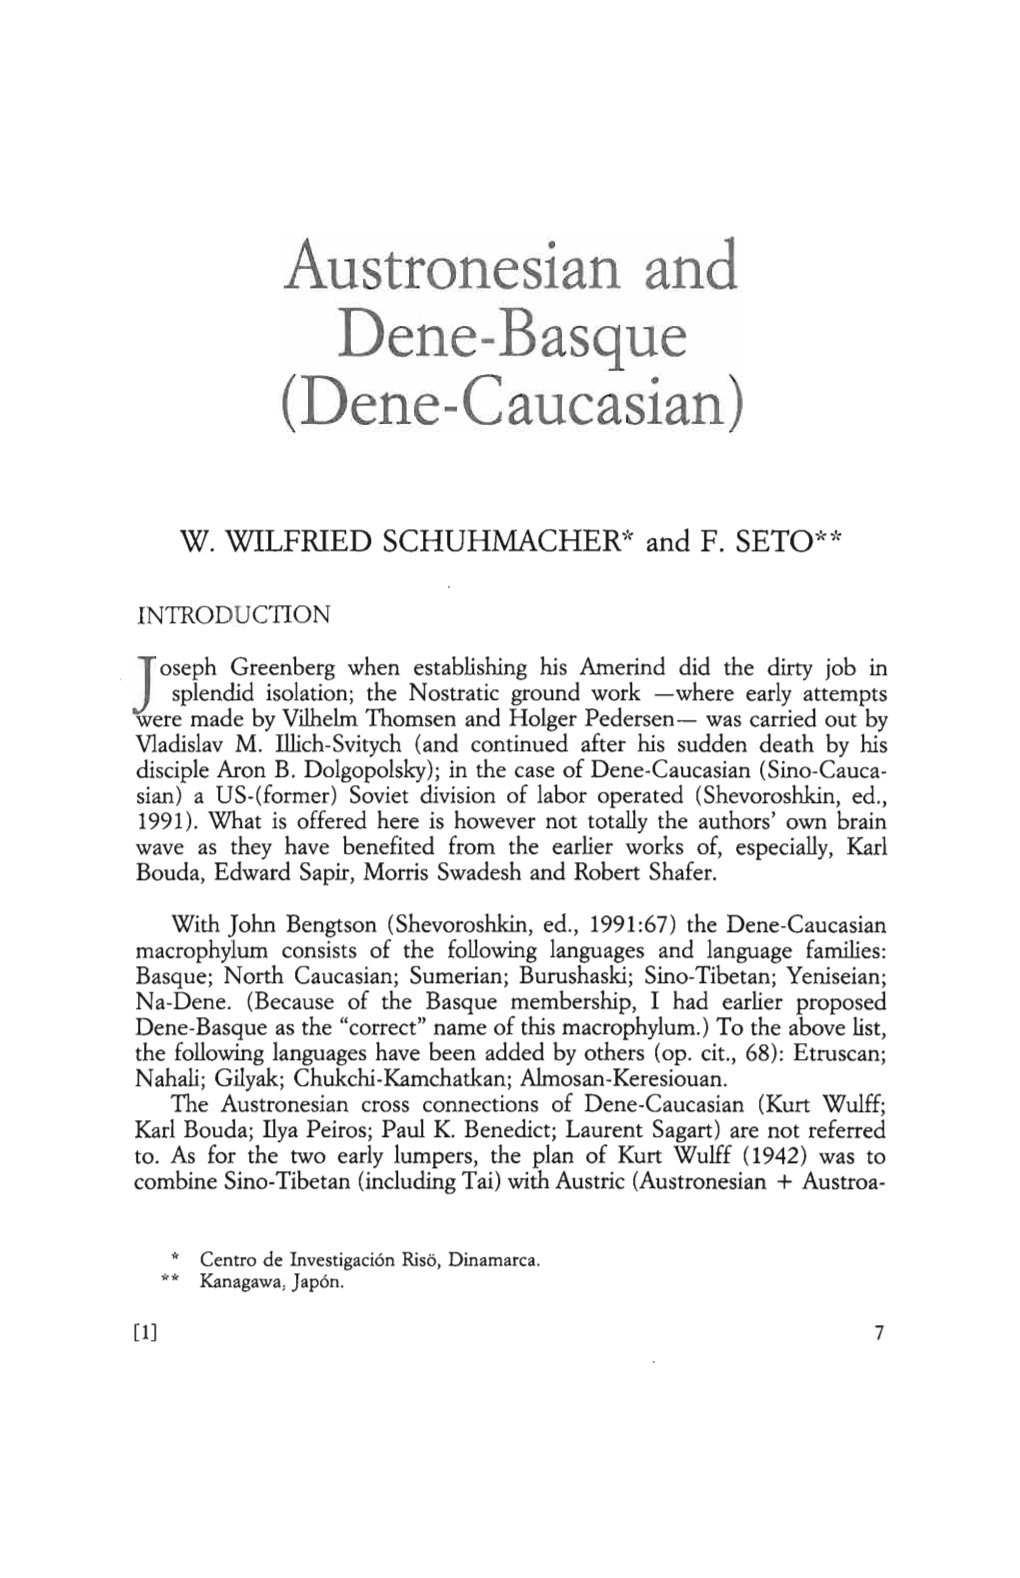 Austronesian and Dene-Basque (Dene-Caucasian)